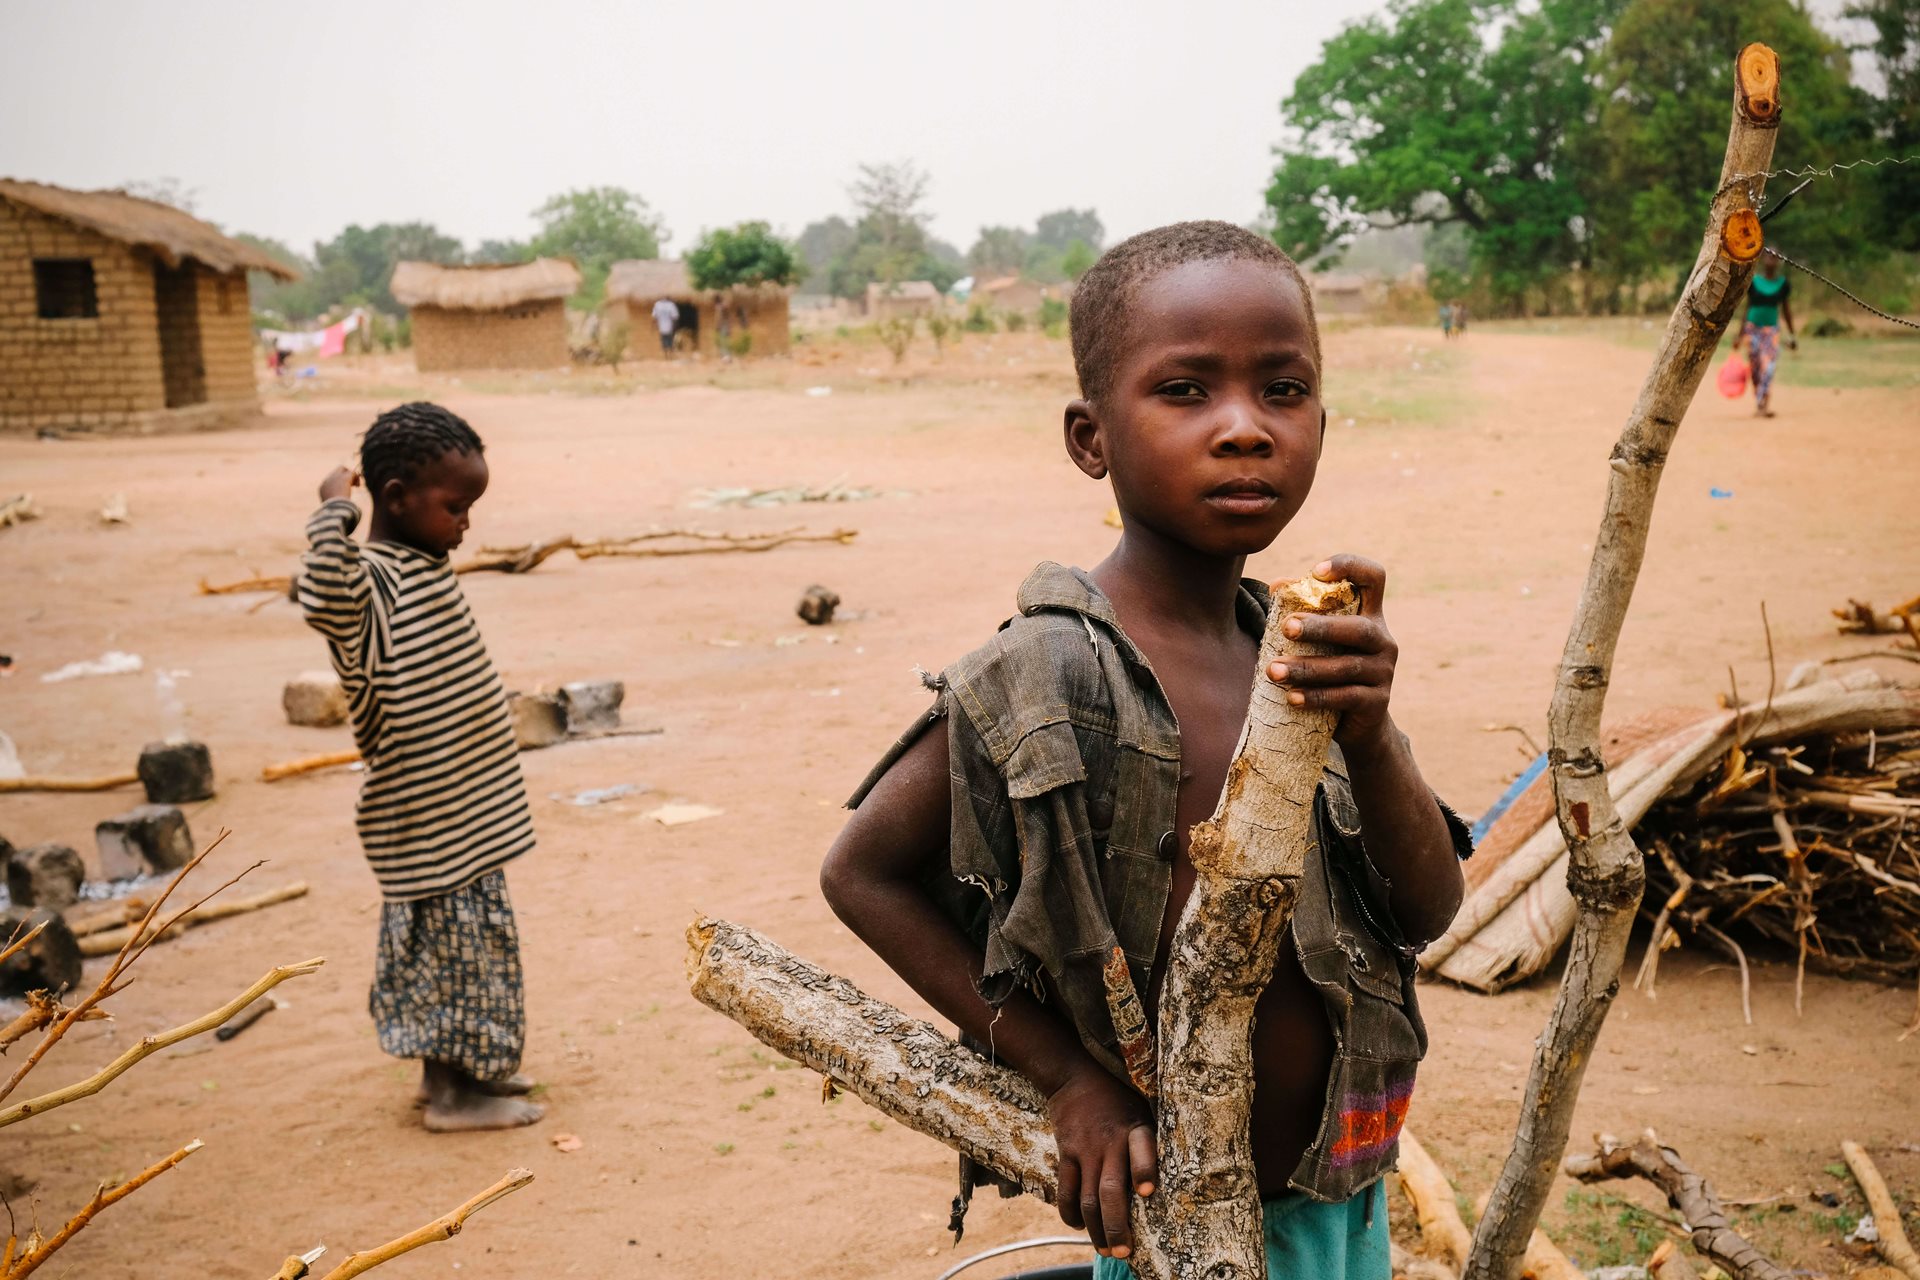 A child holding a tree limb next to a pile of sticks.